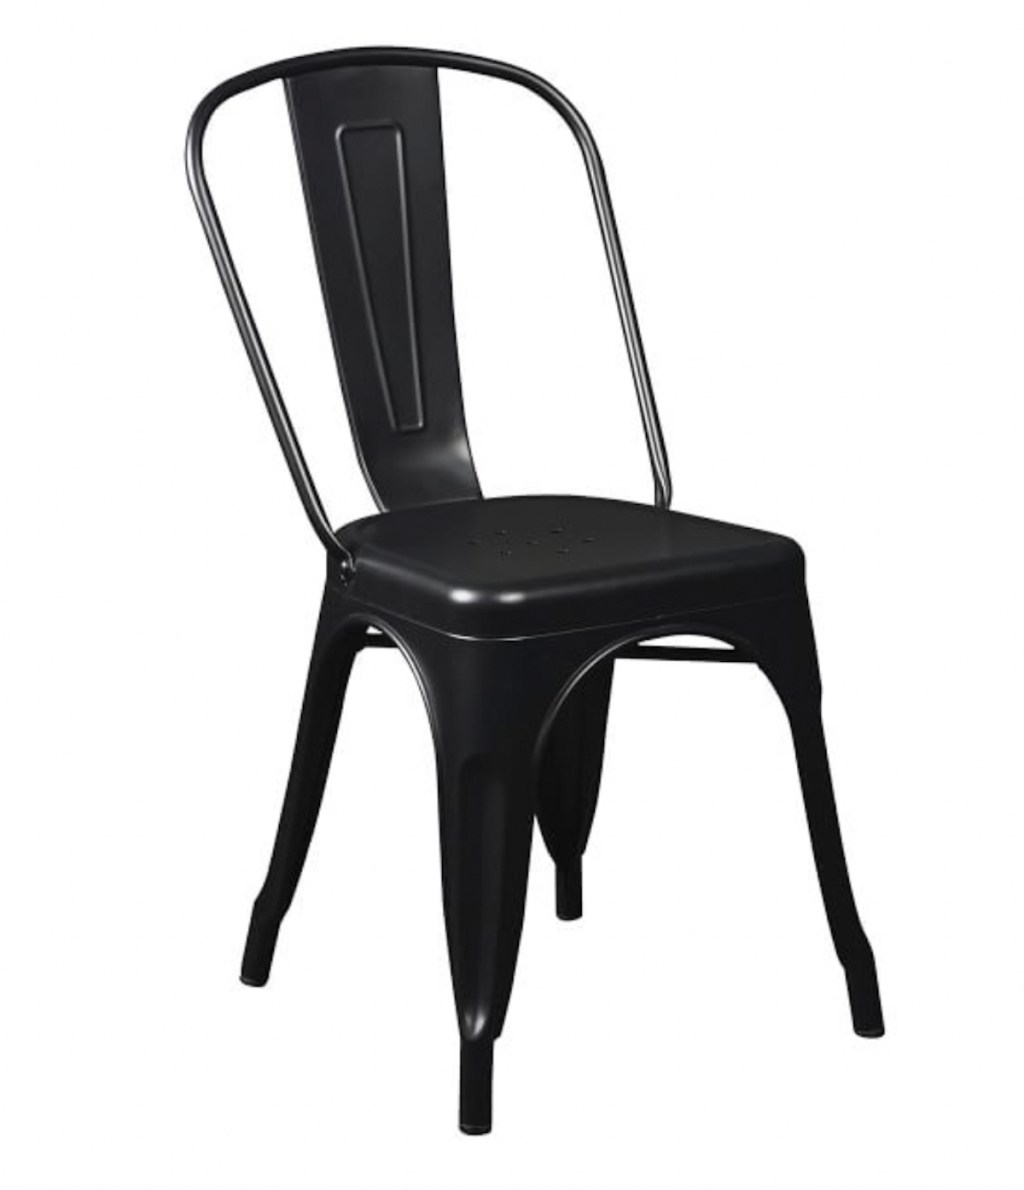 stock photo of black metal chair 